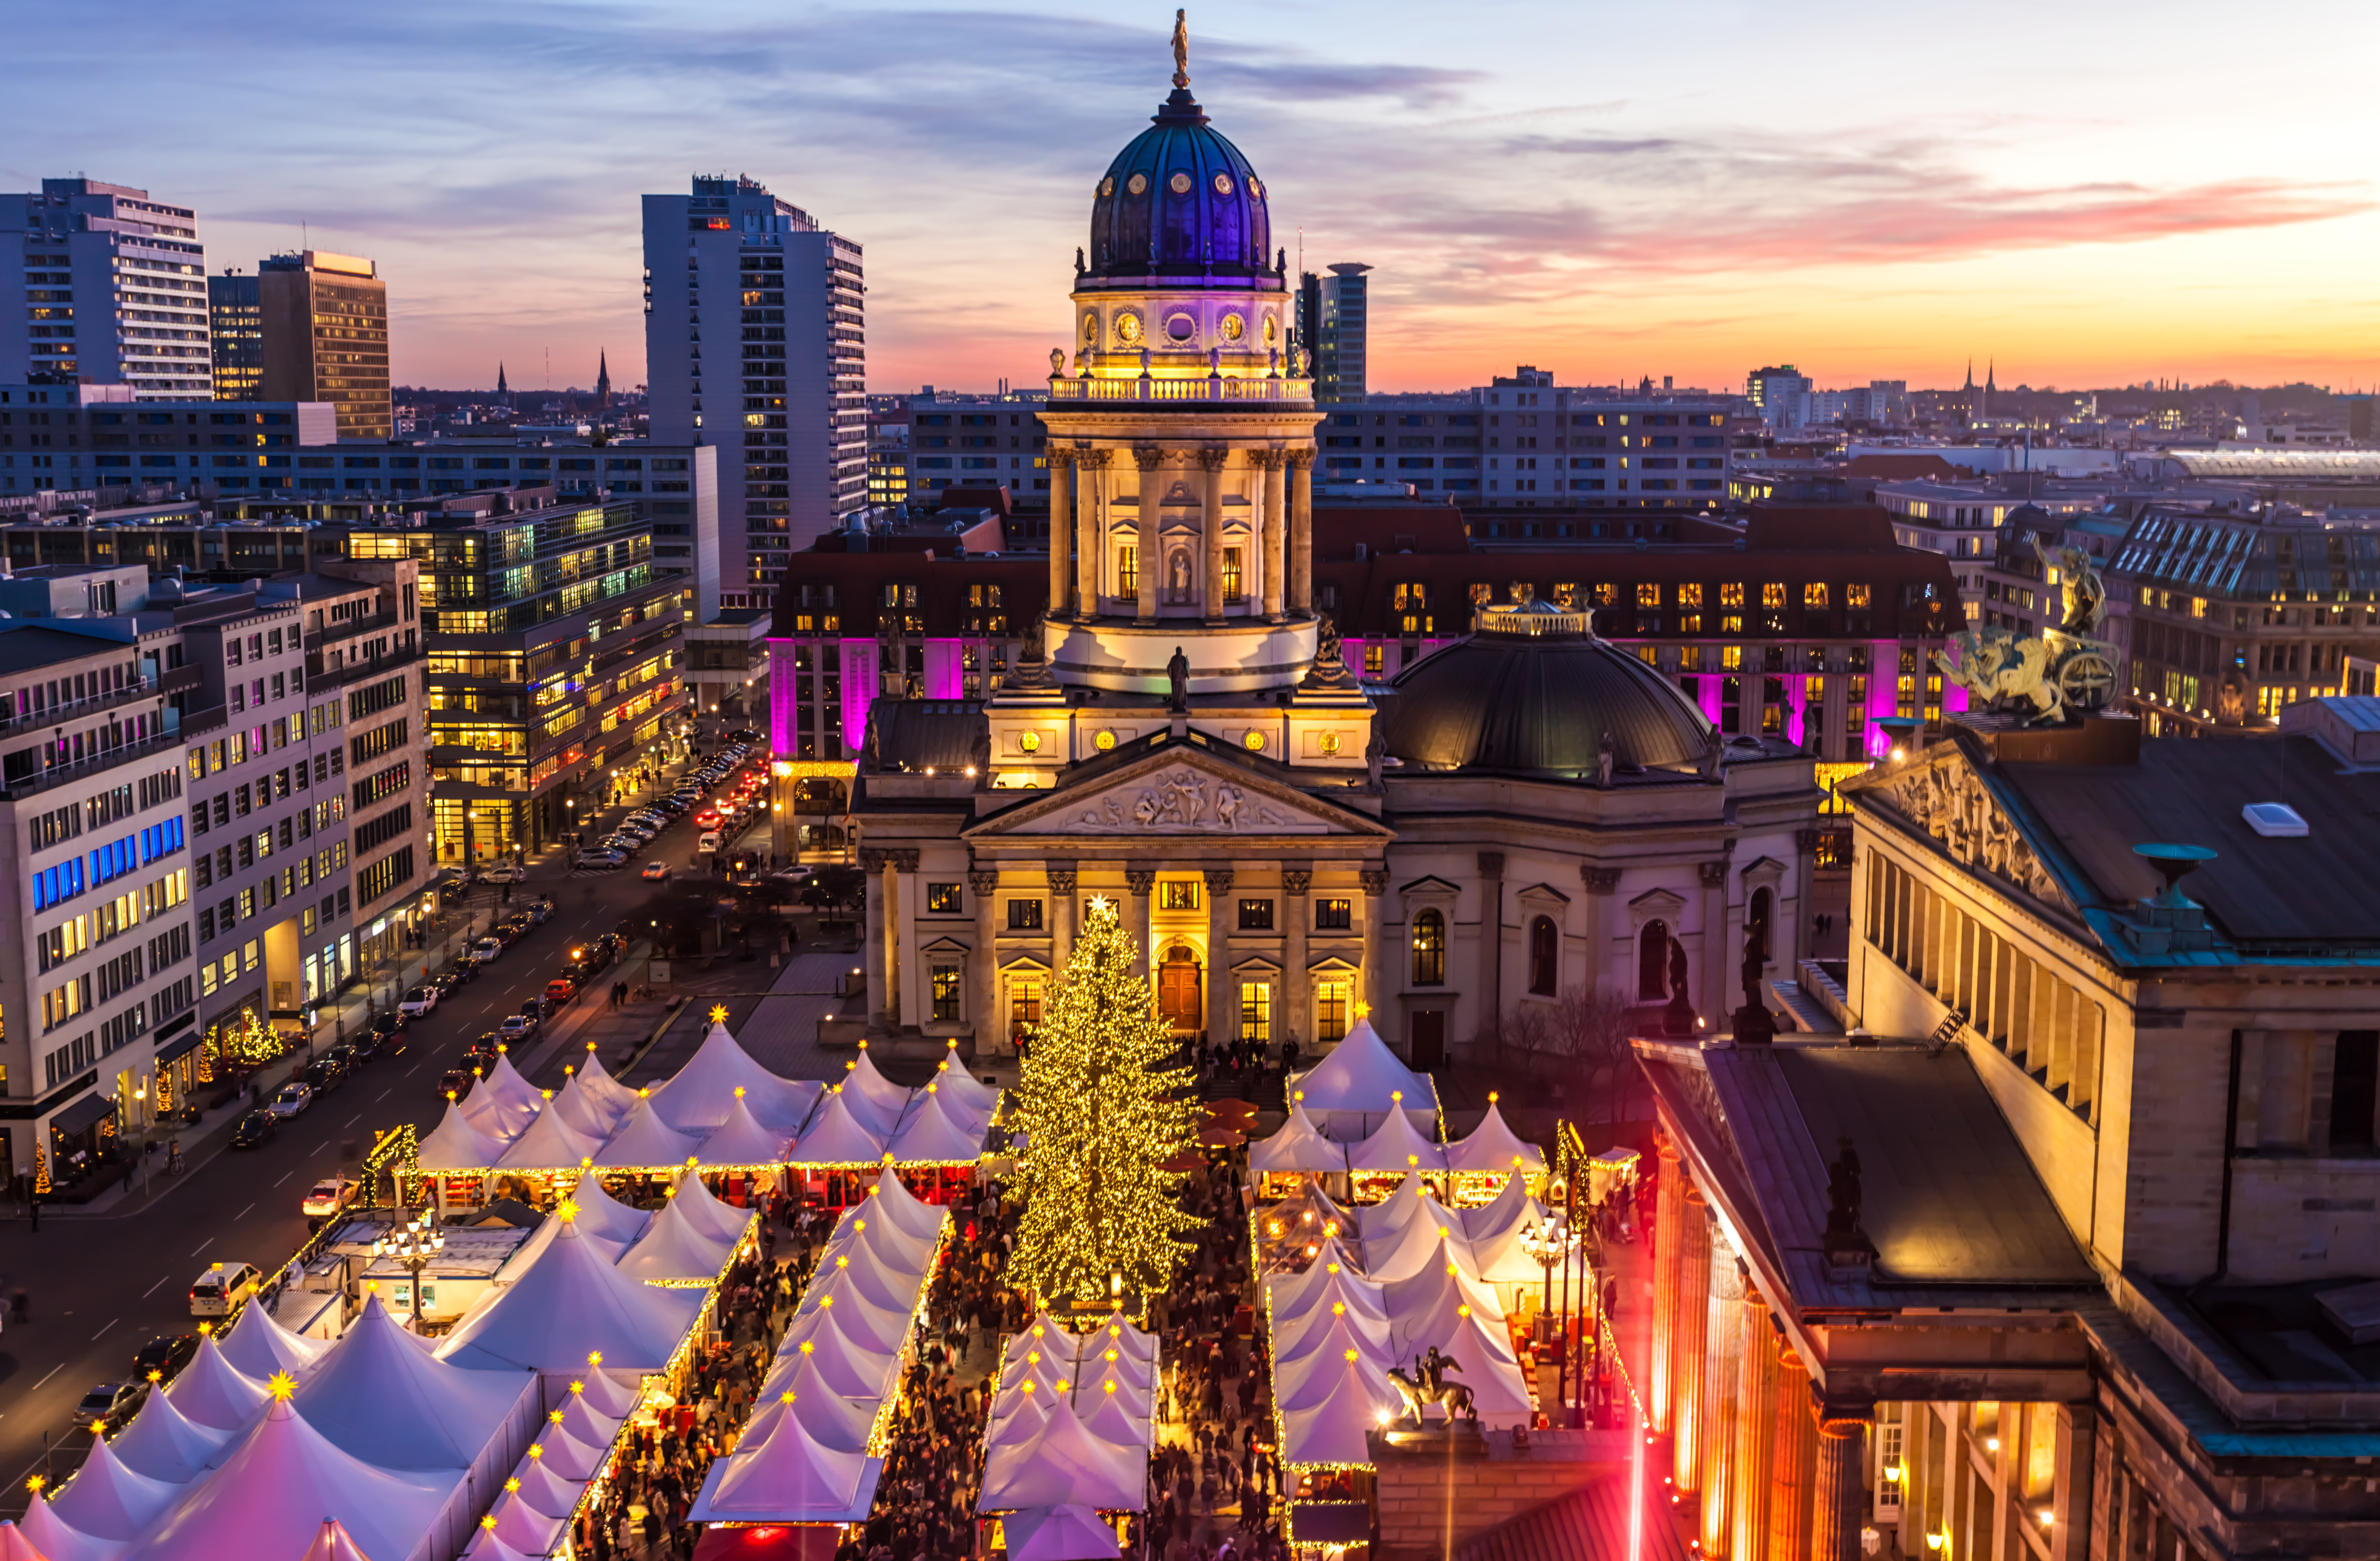 Christmas Market in Berlin / Gendarmenmarkt